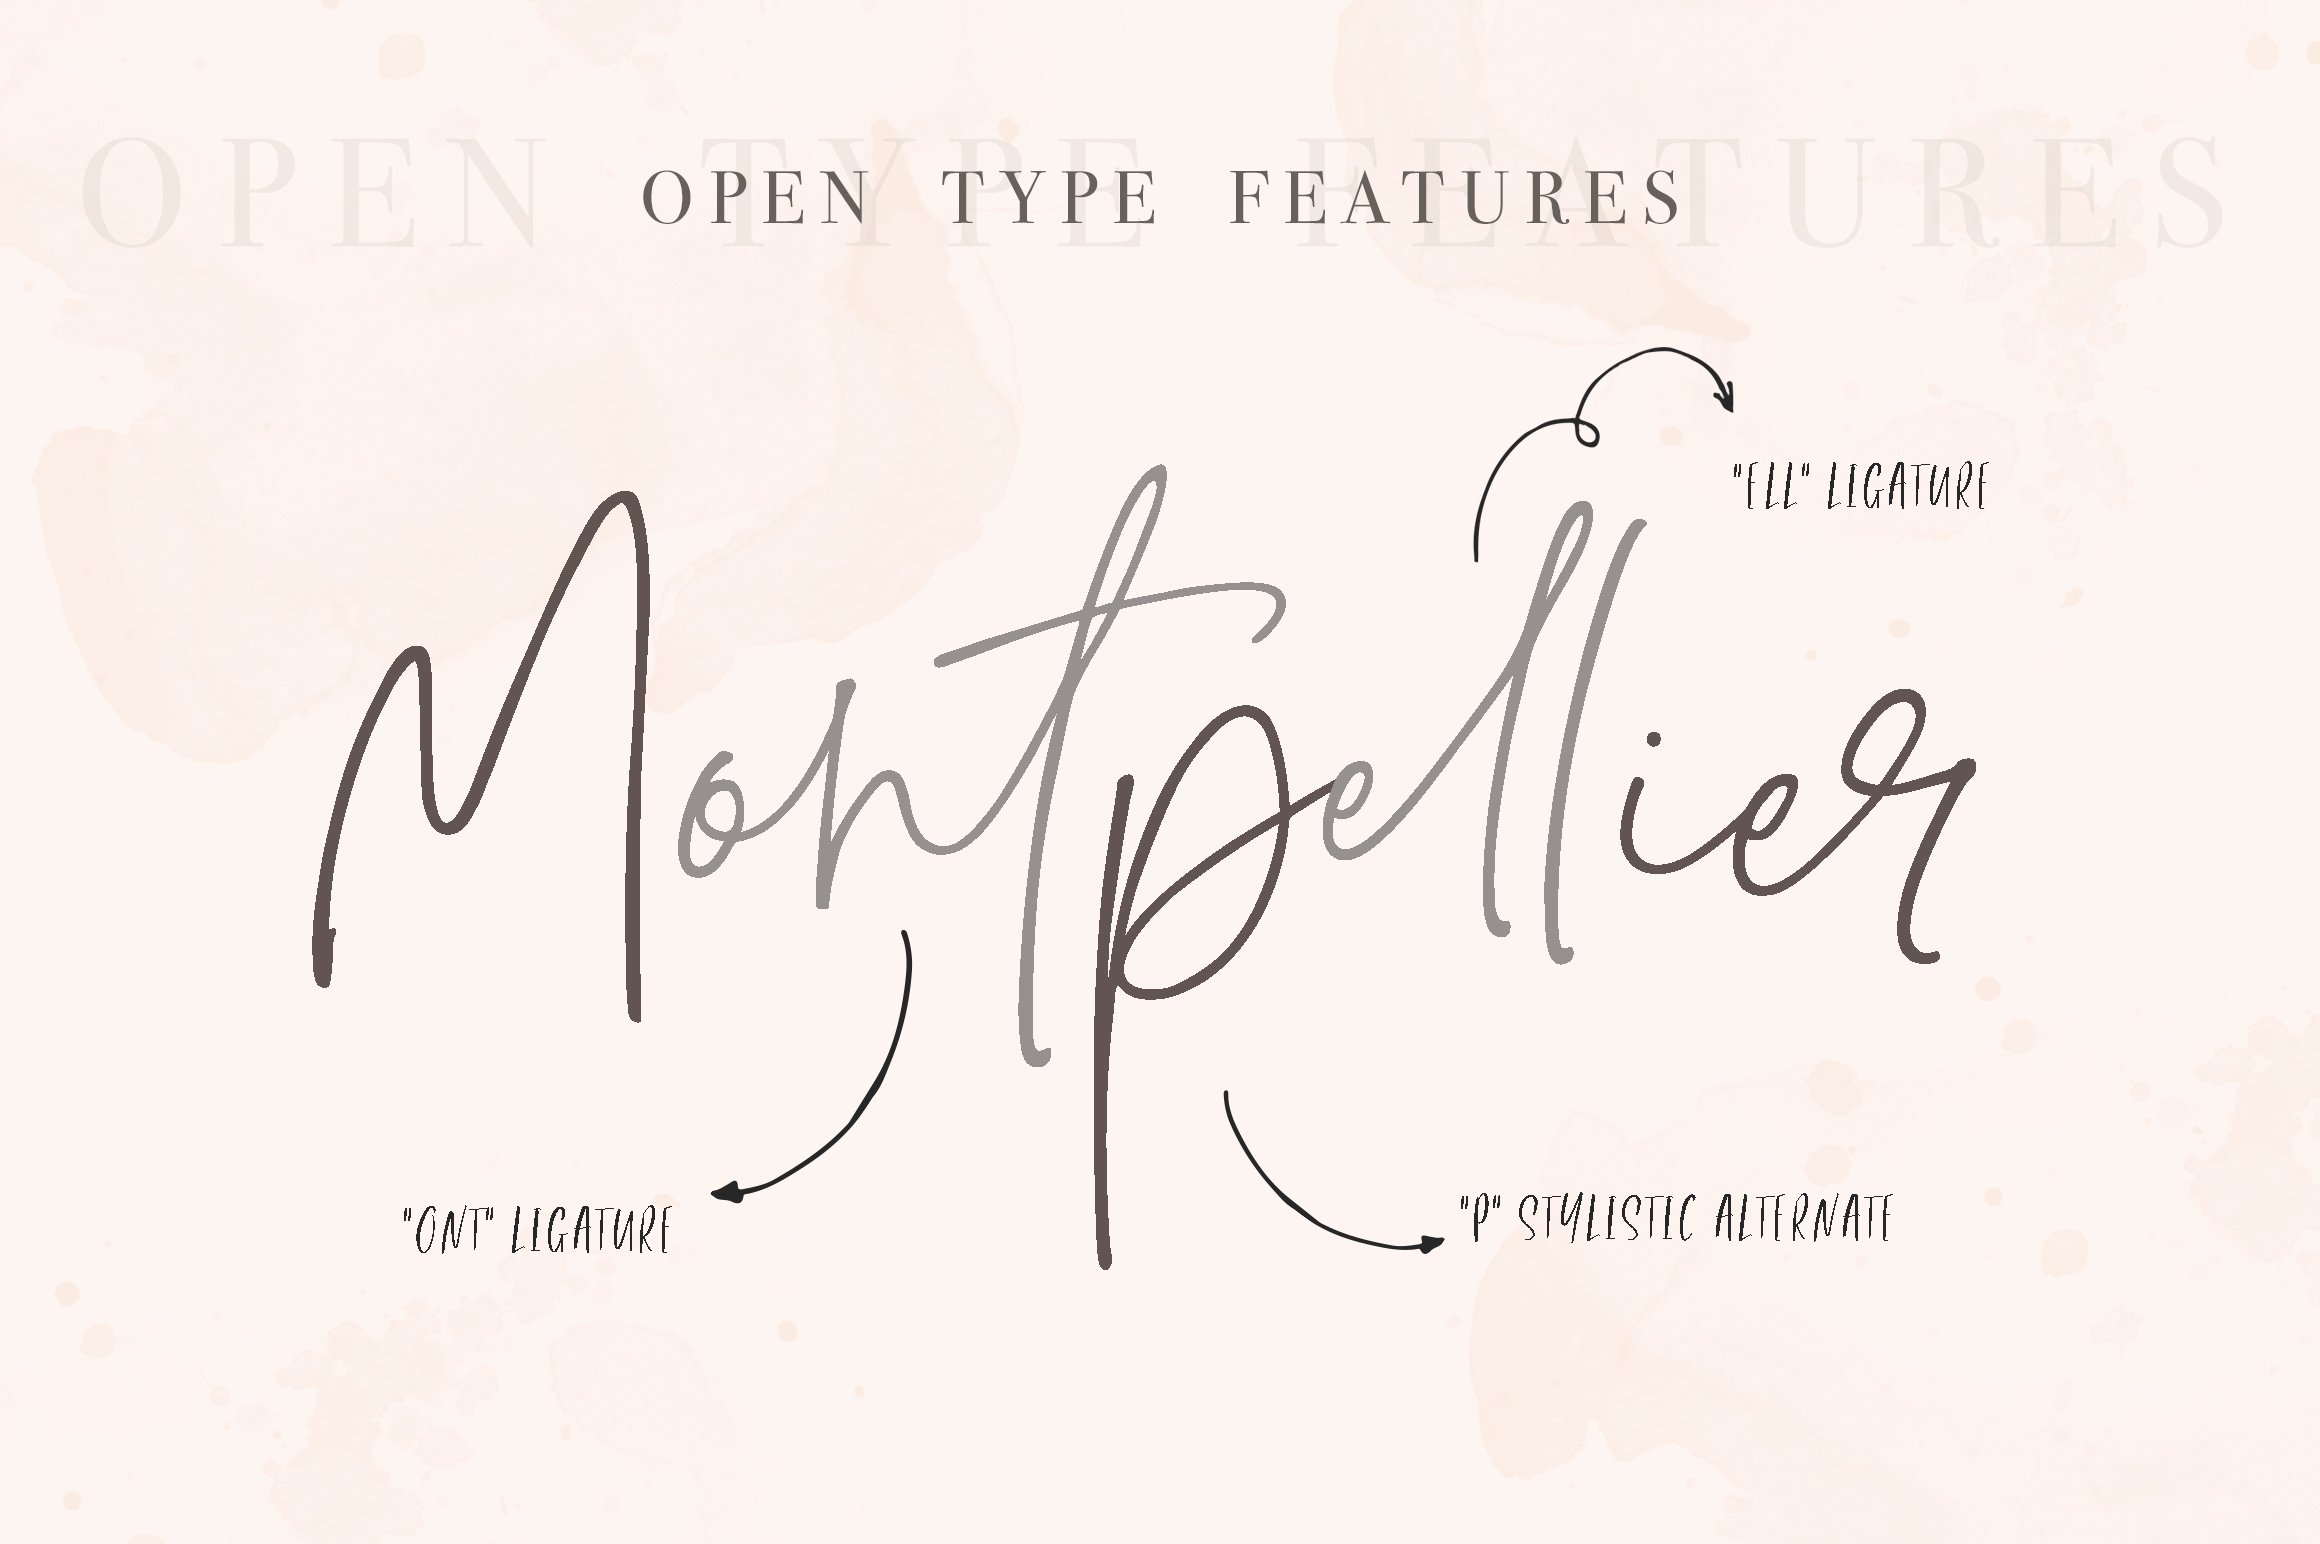 Montpellier - Signature Font